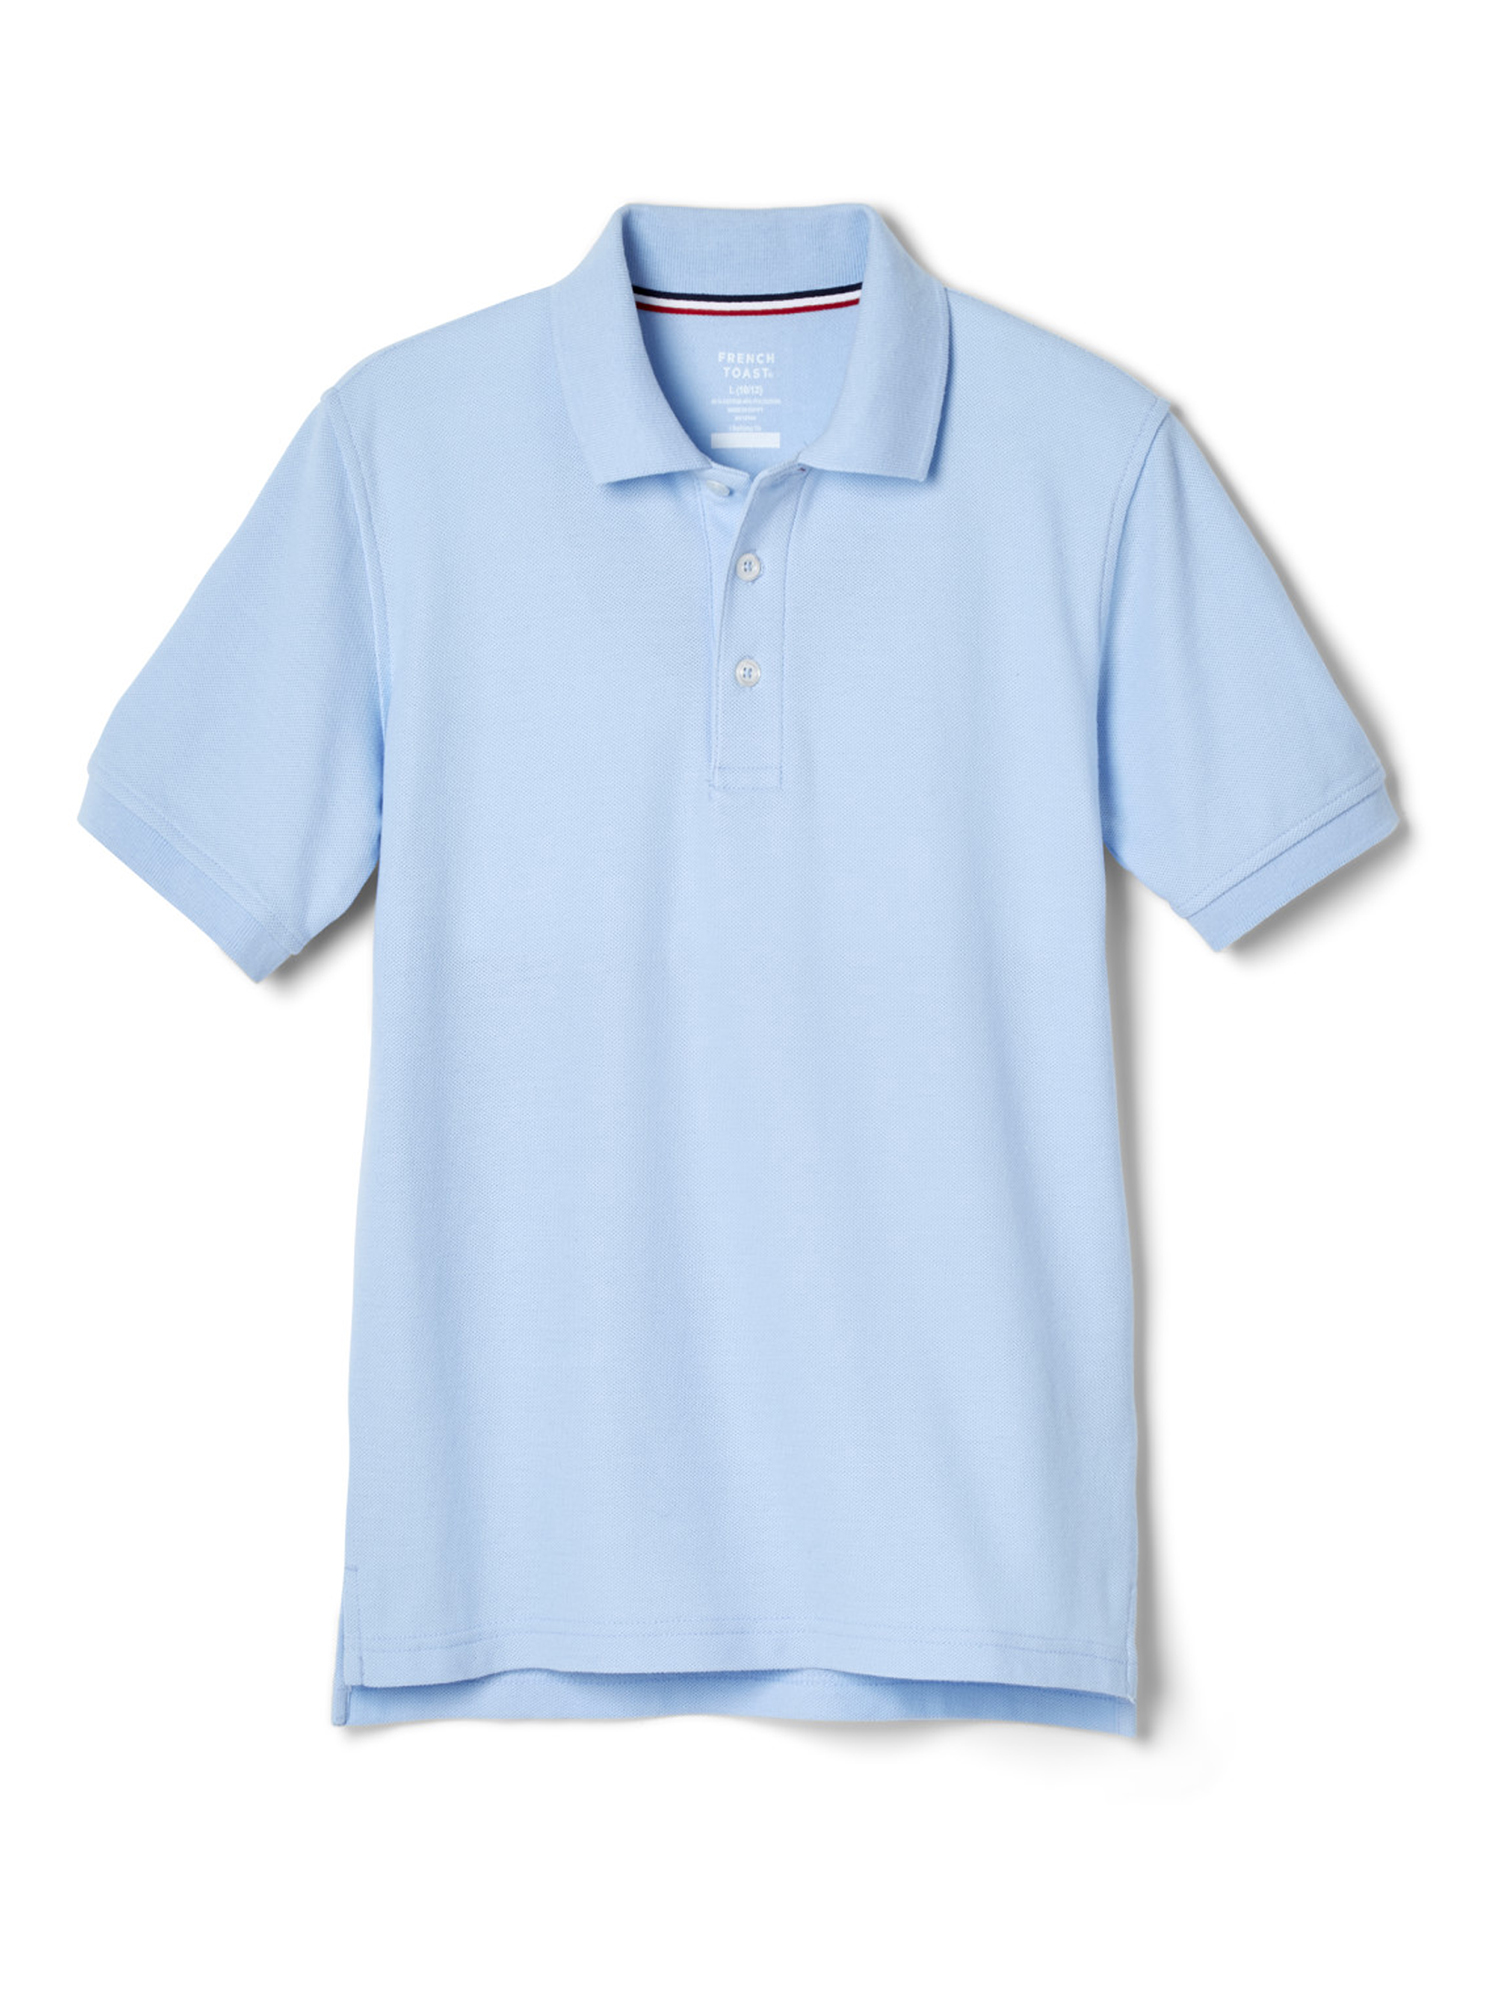 French Toast Boys School Uniform Short Sleeve Pique Polo Shirt, Sizes 4-20 & Husky